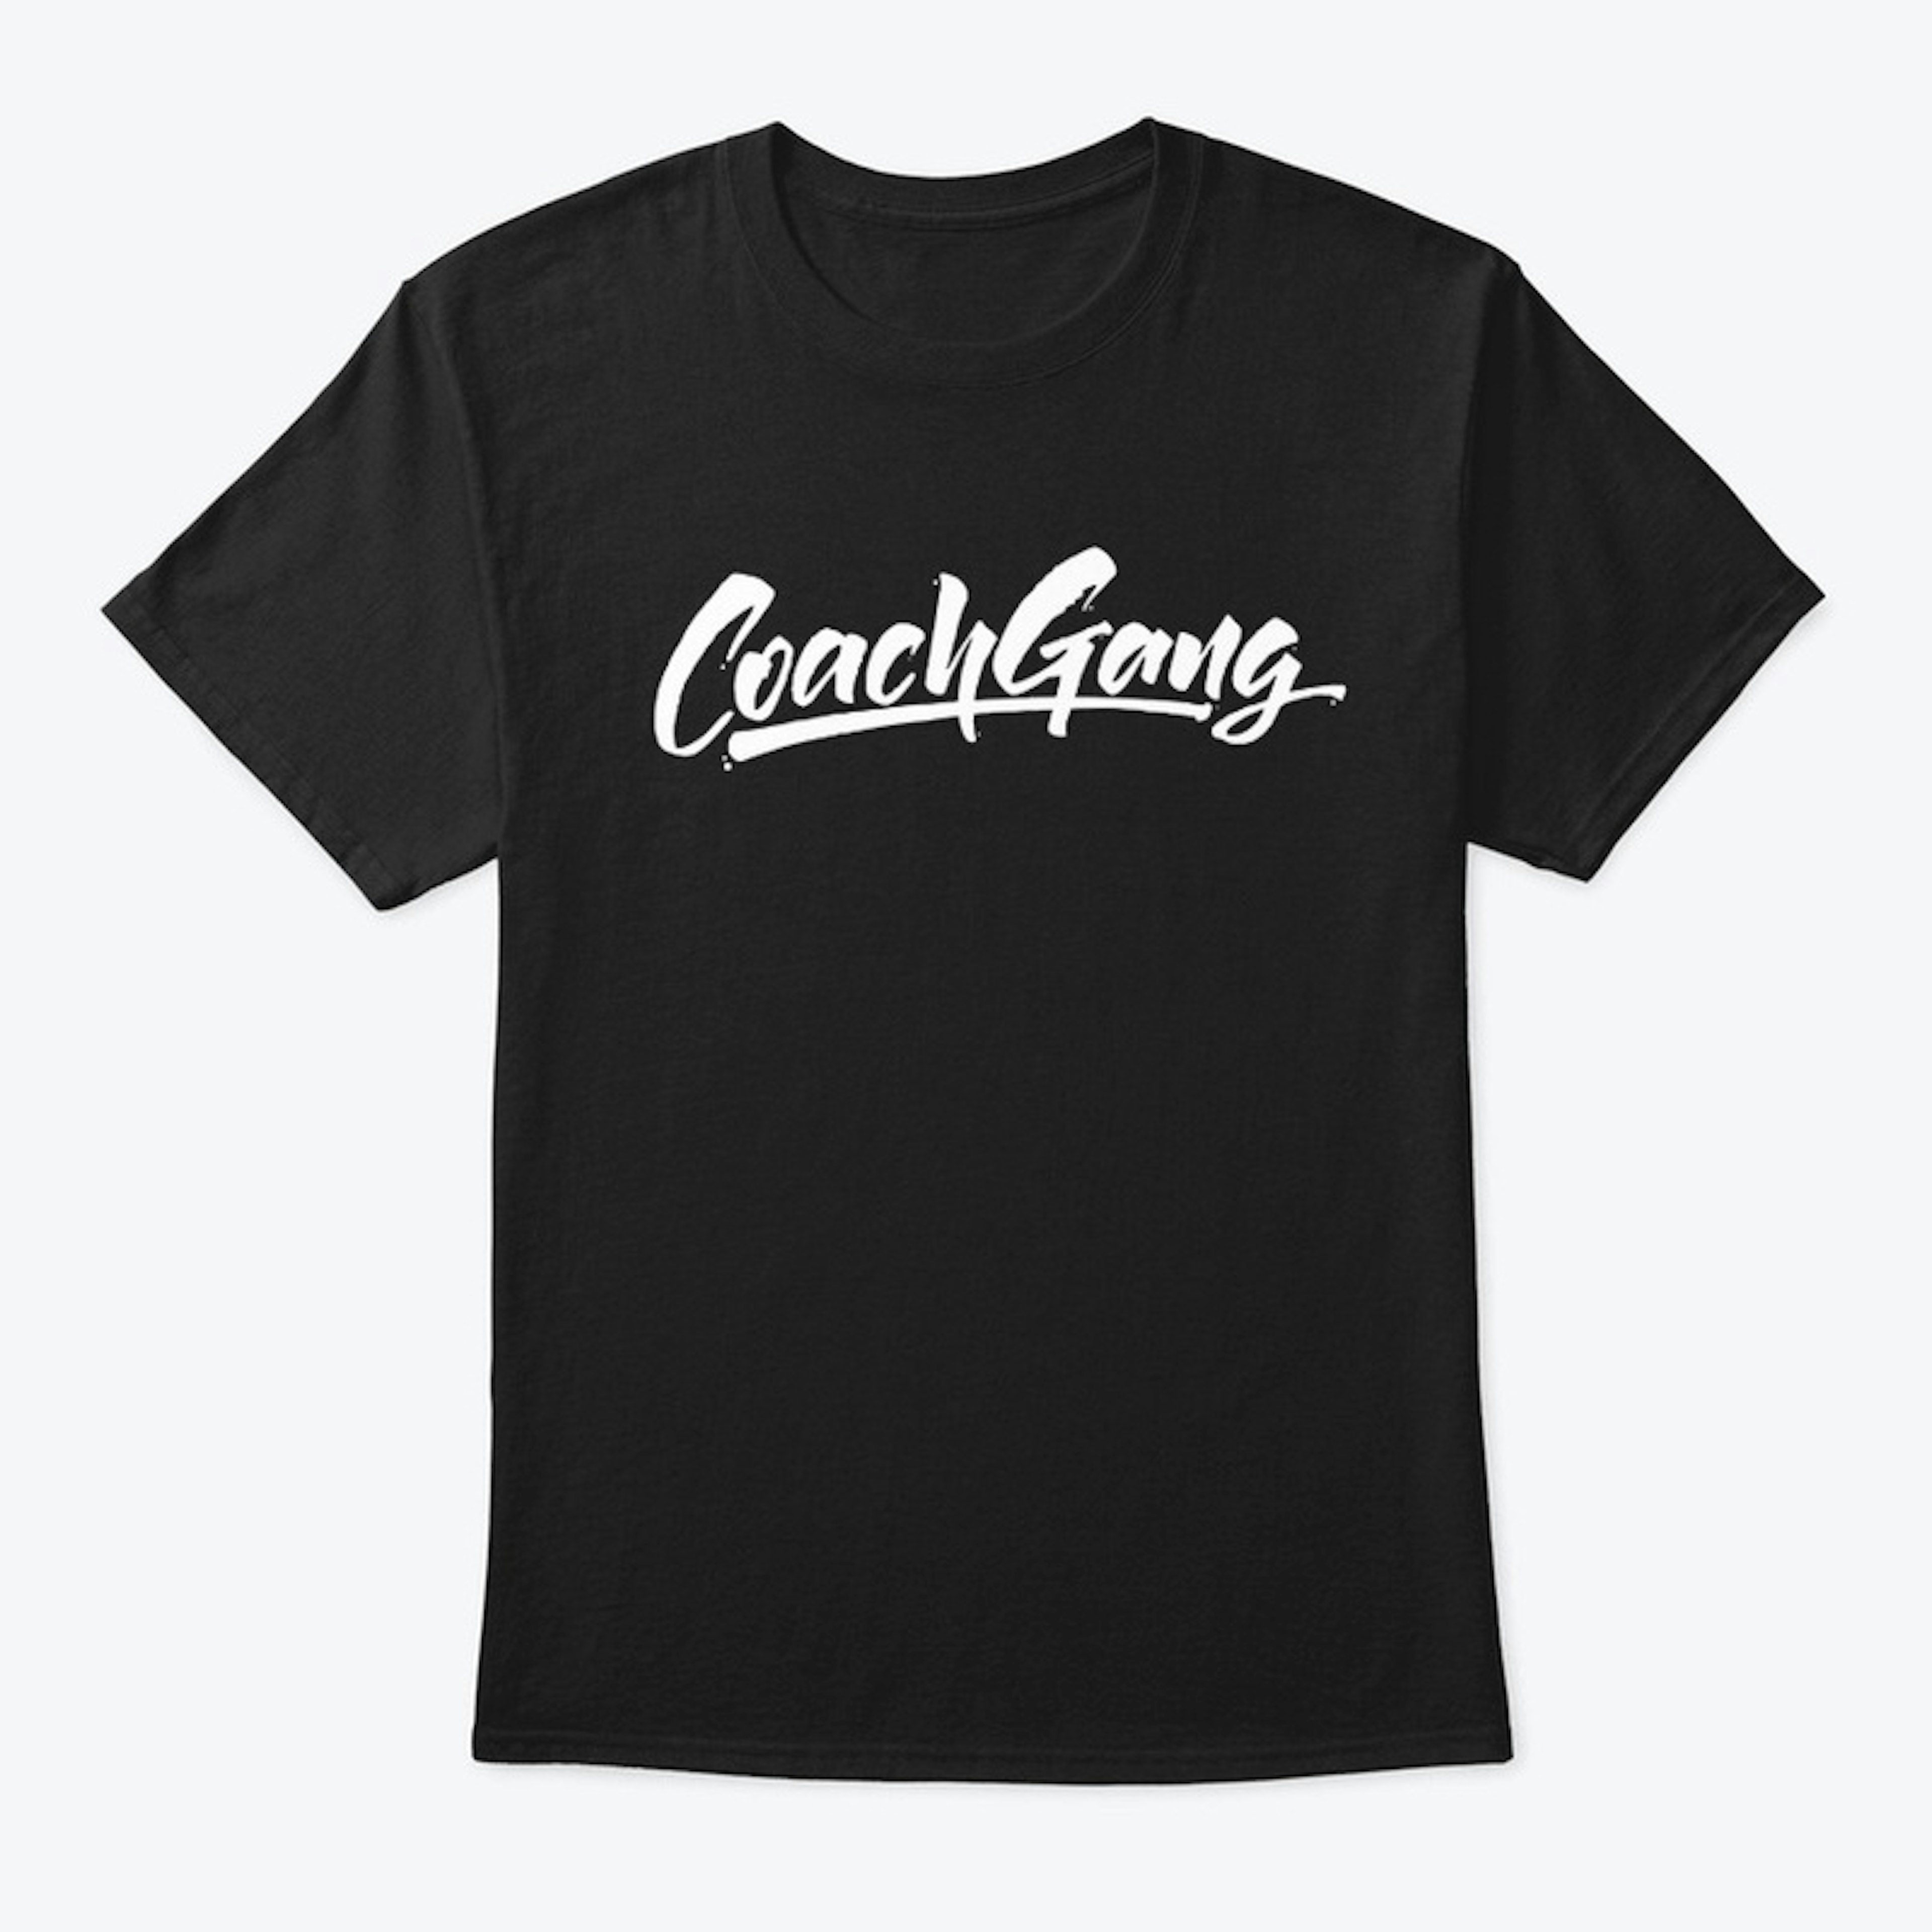 Coach Gang Black Graphic Tee 